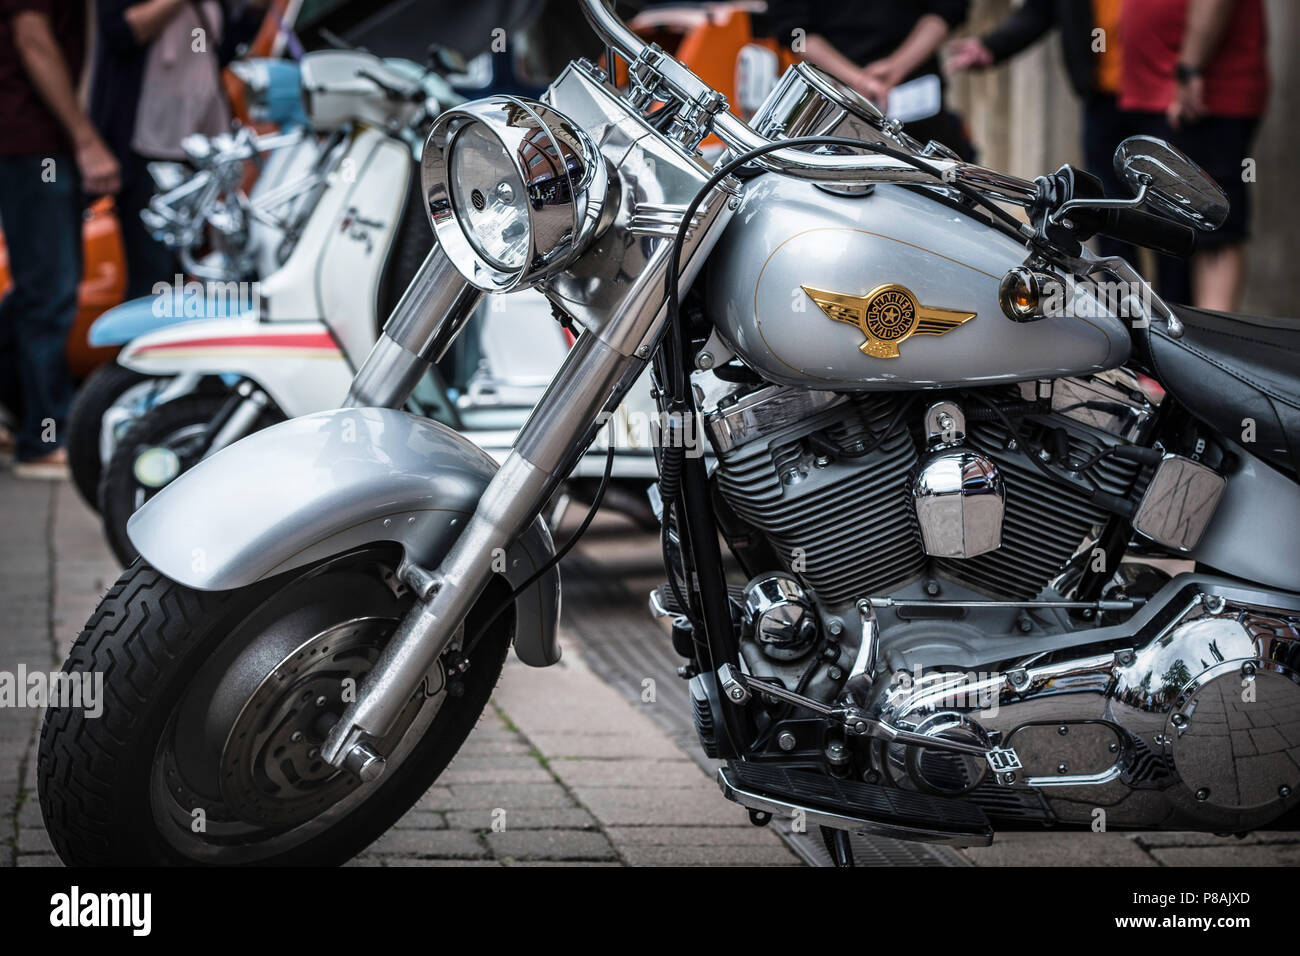 Harley Davidson Fat Boy Immagini E Fotos Stock Alamy